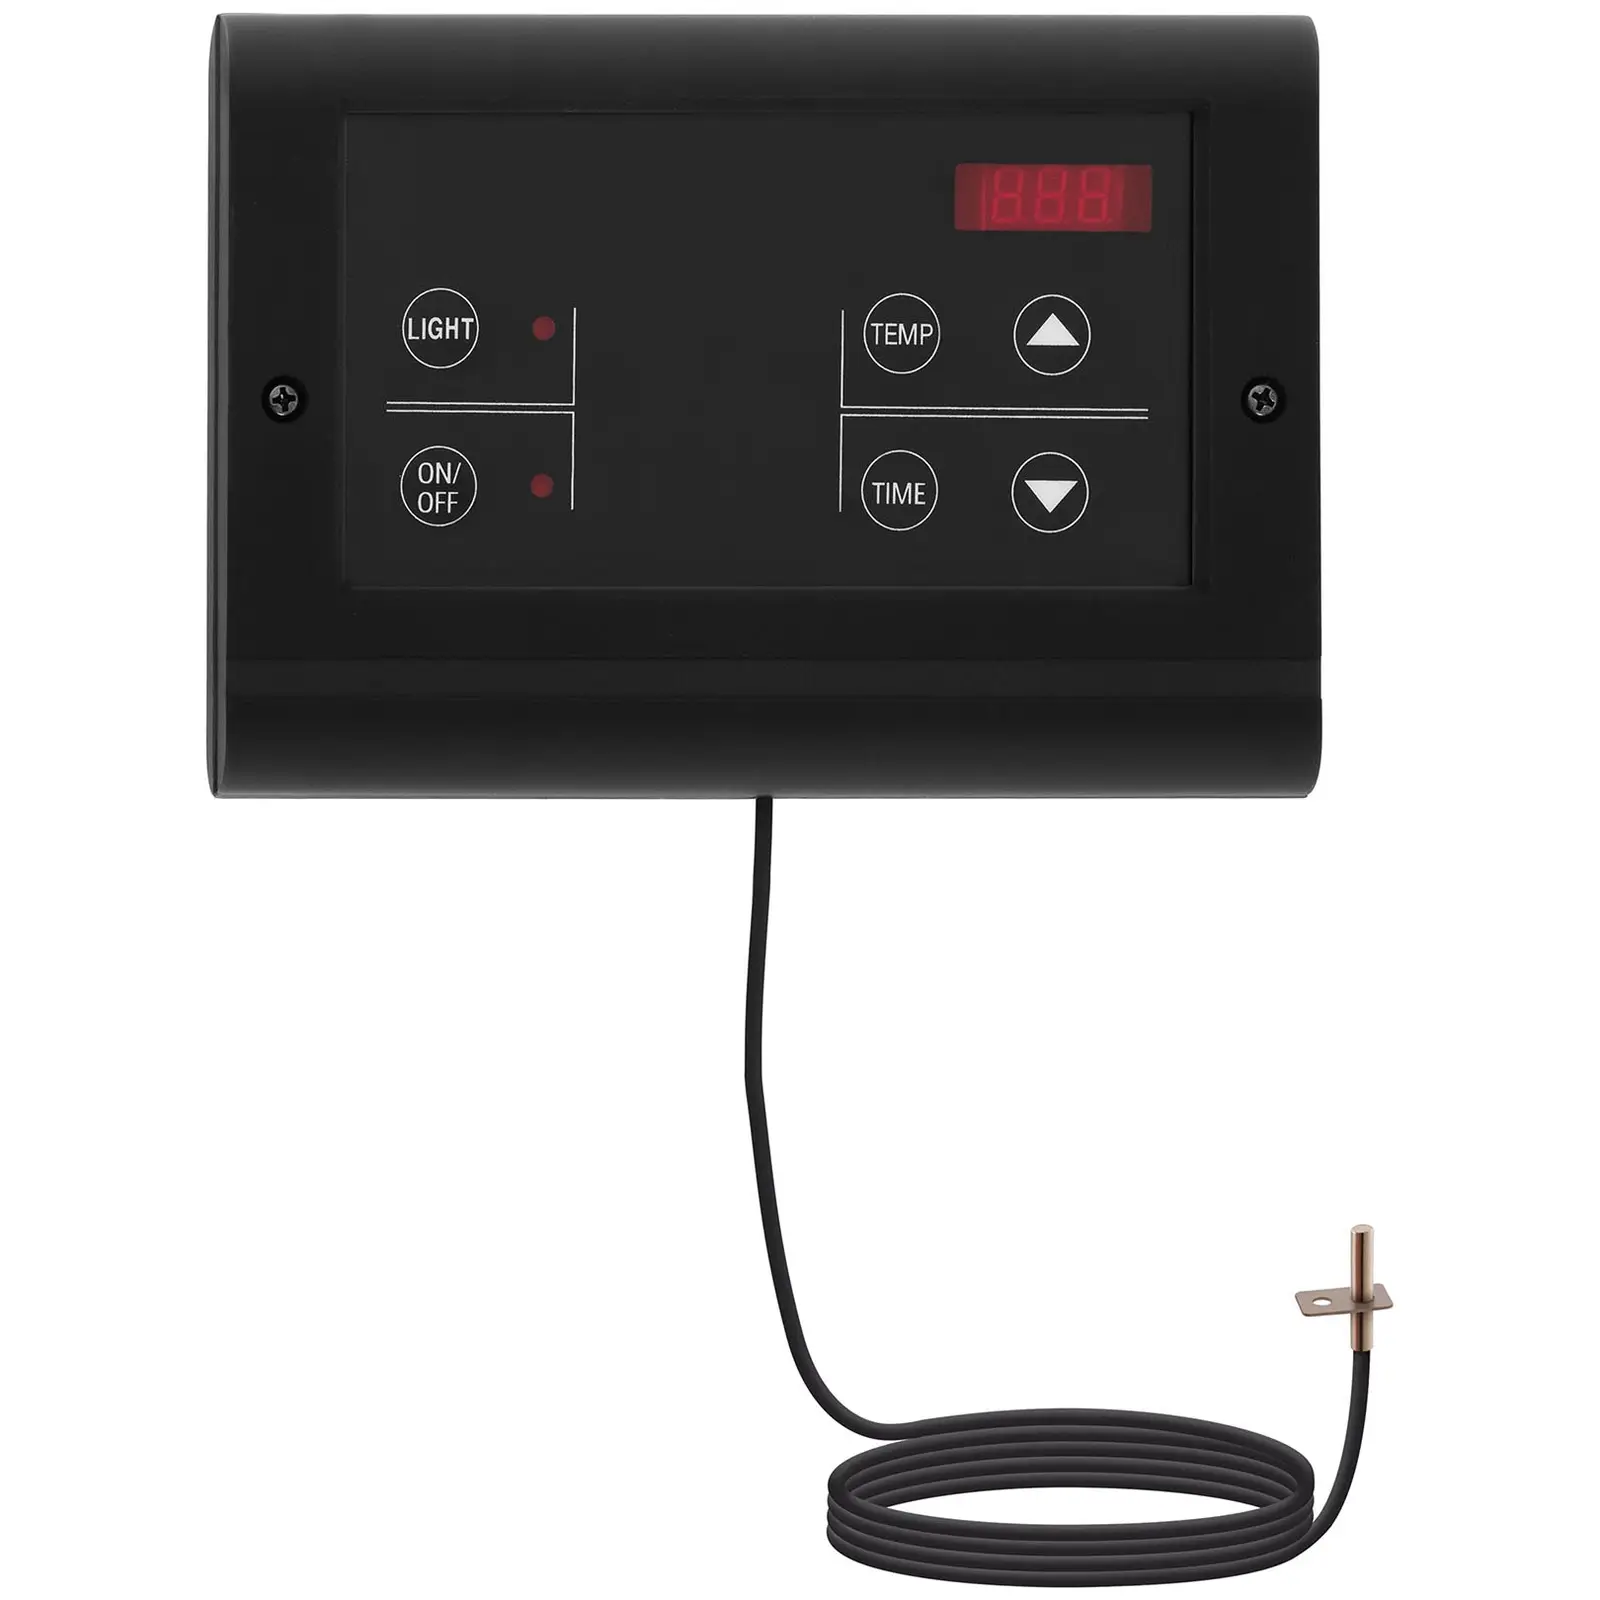 Sauna Control Panel with Sauna Stones - LED display - 20 kg - for Uniprodo sauna heaters